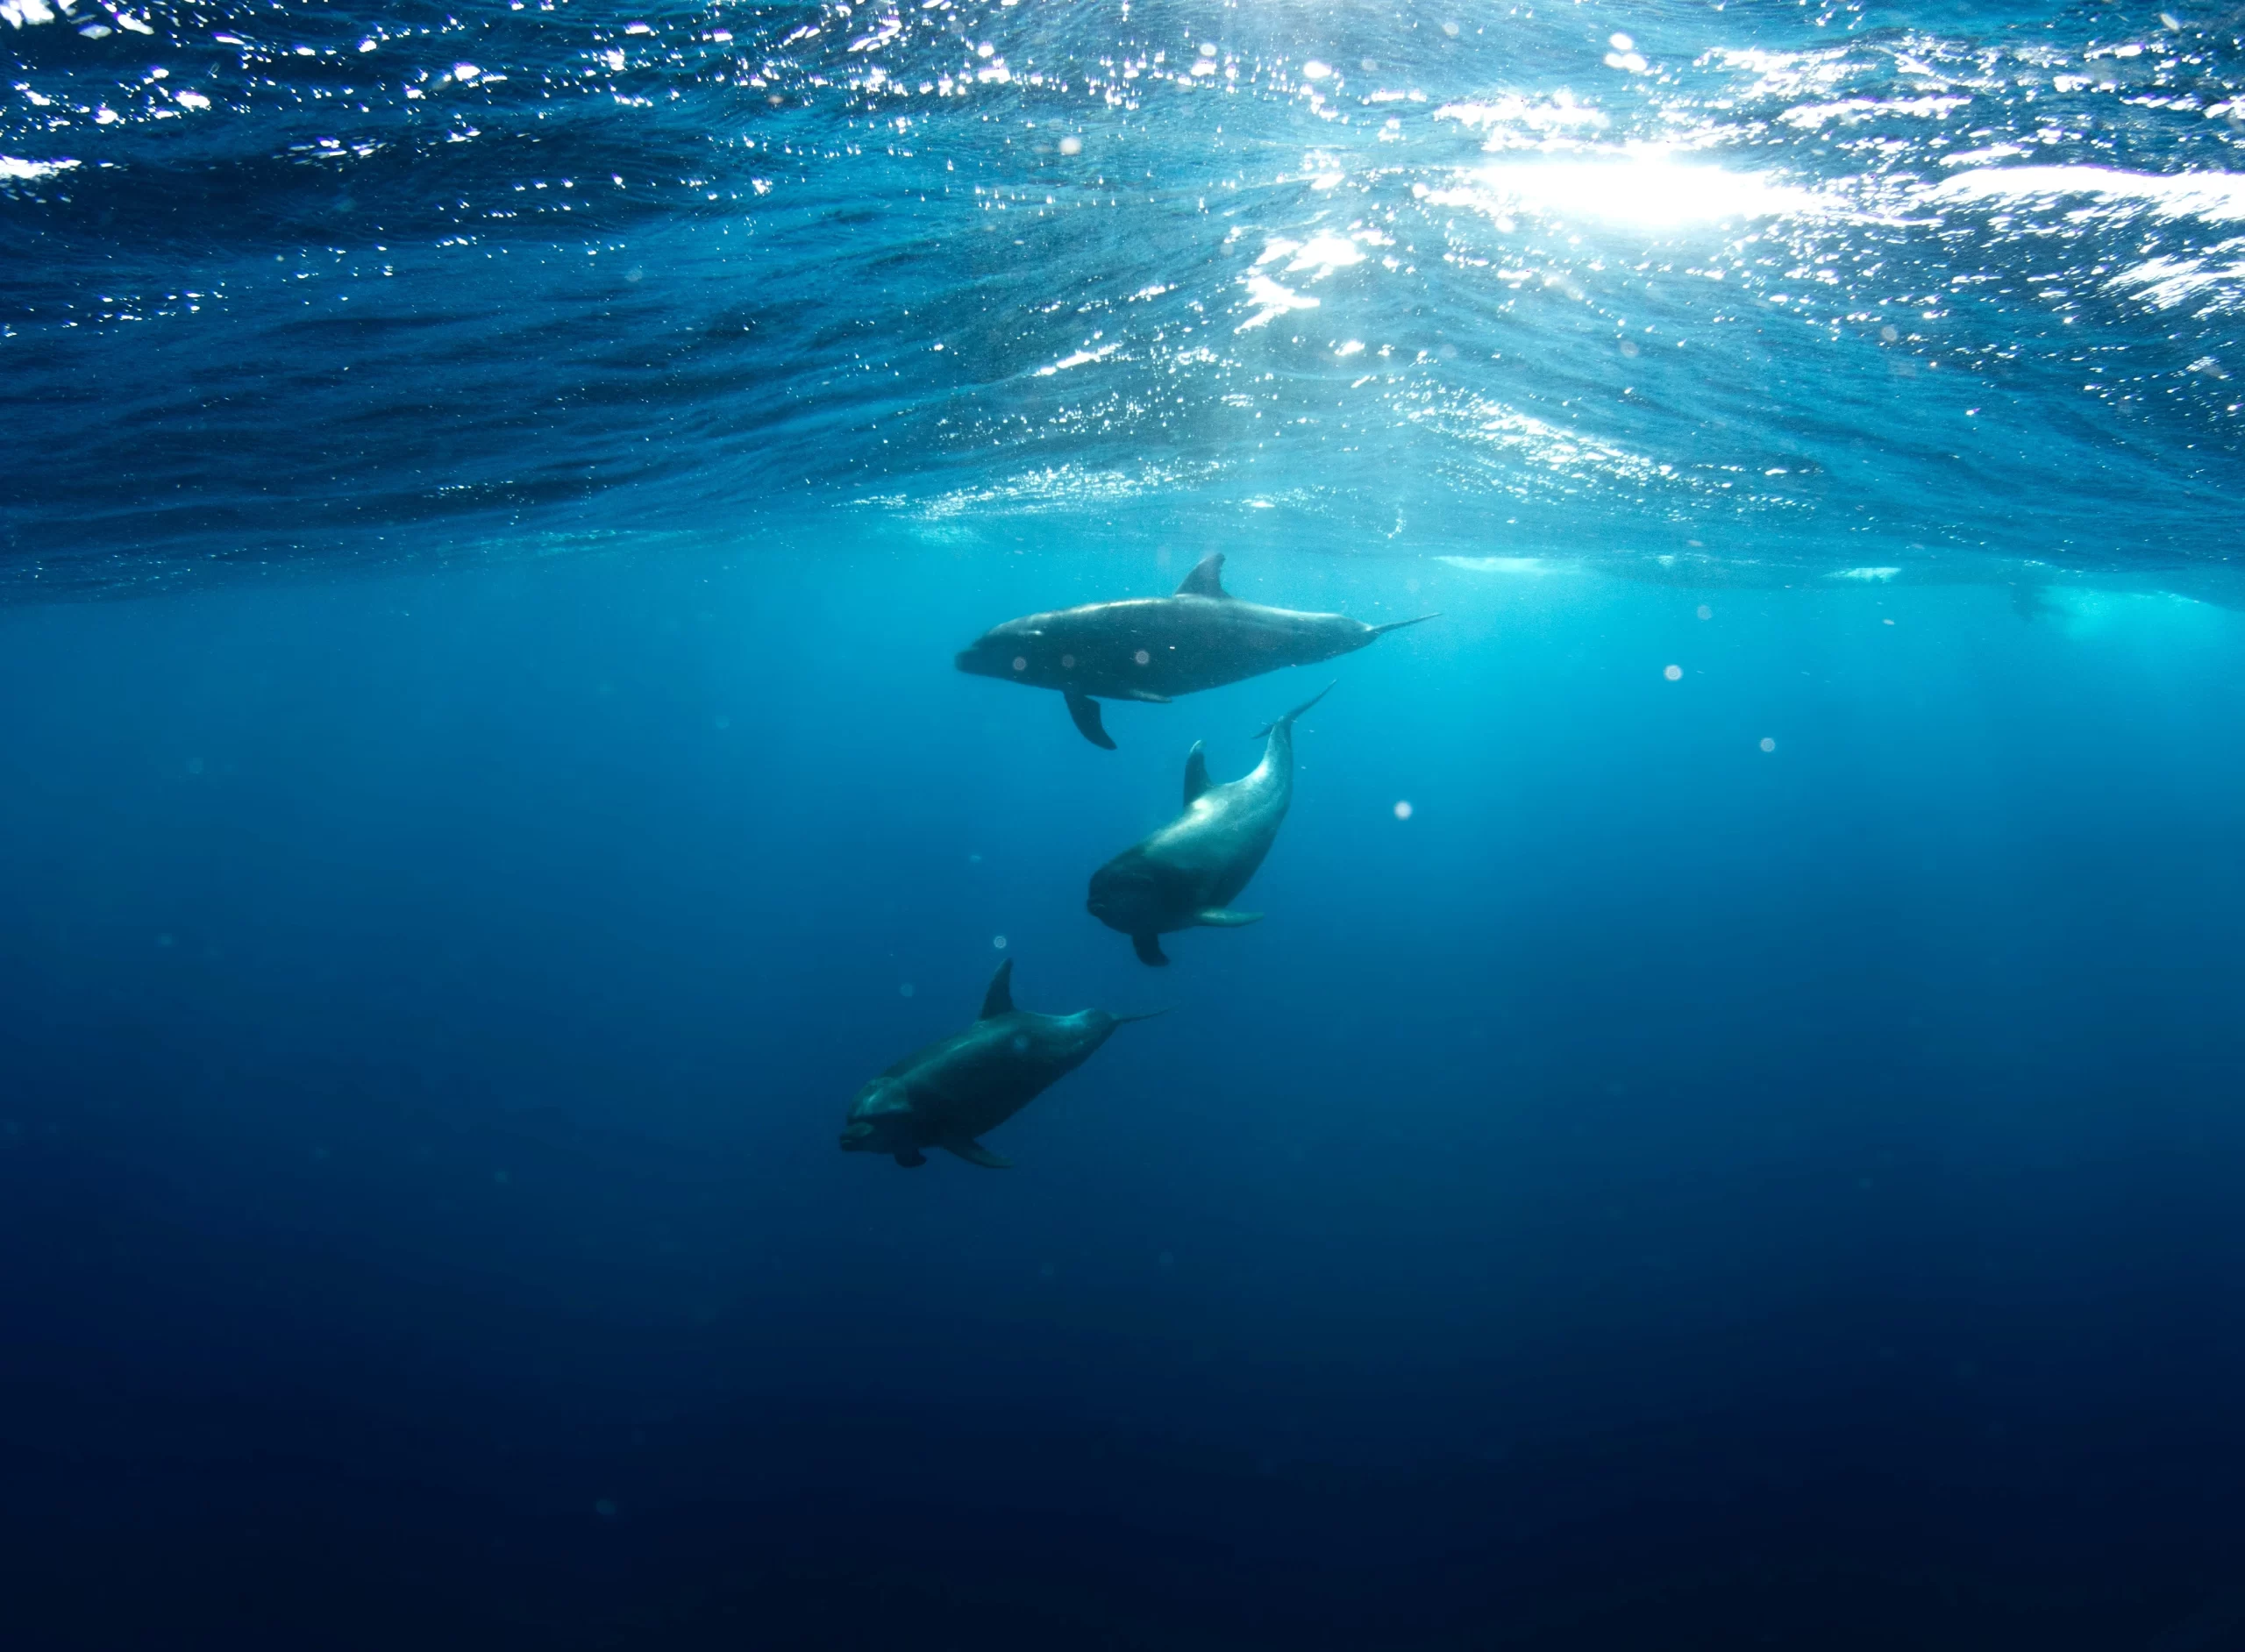 talia-cohen-dolphins in the ocean unsplash